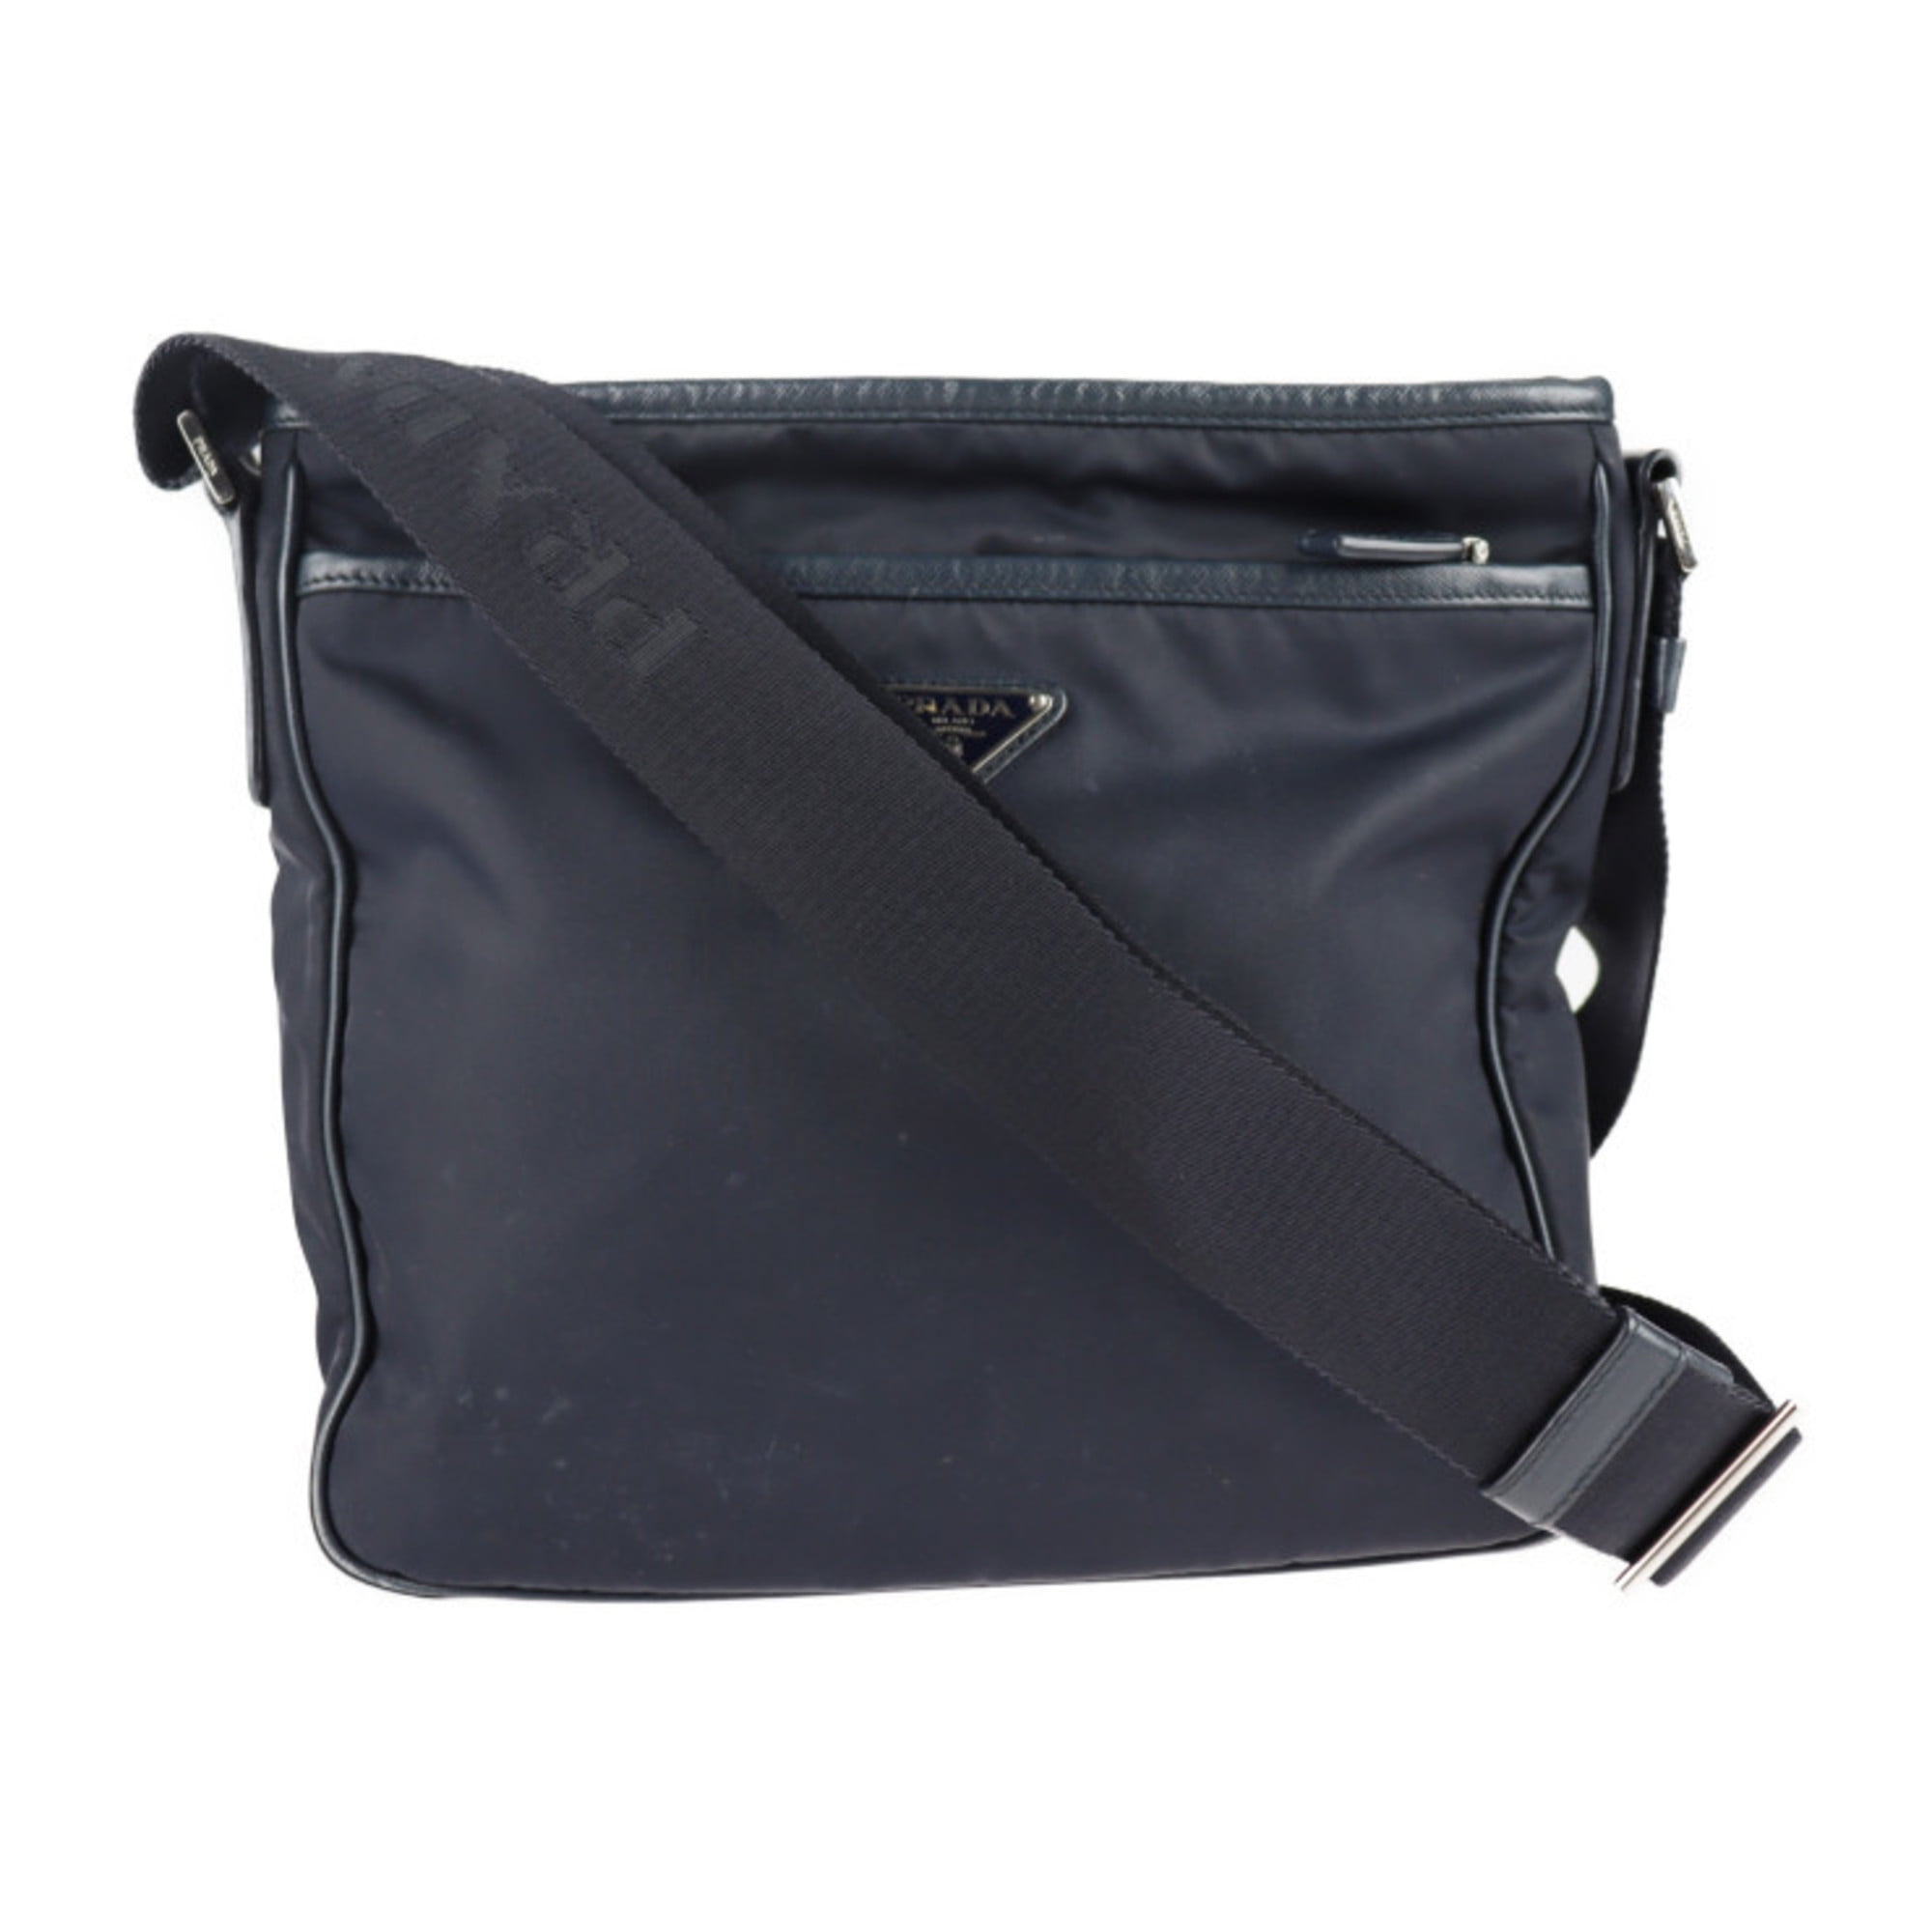 Prada Authenticated Leather Clutch Bag